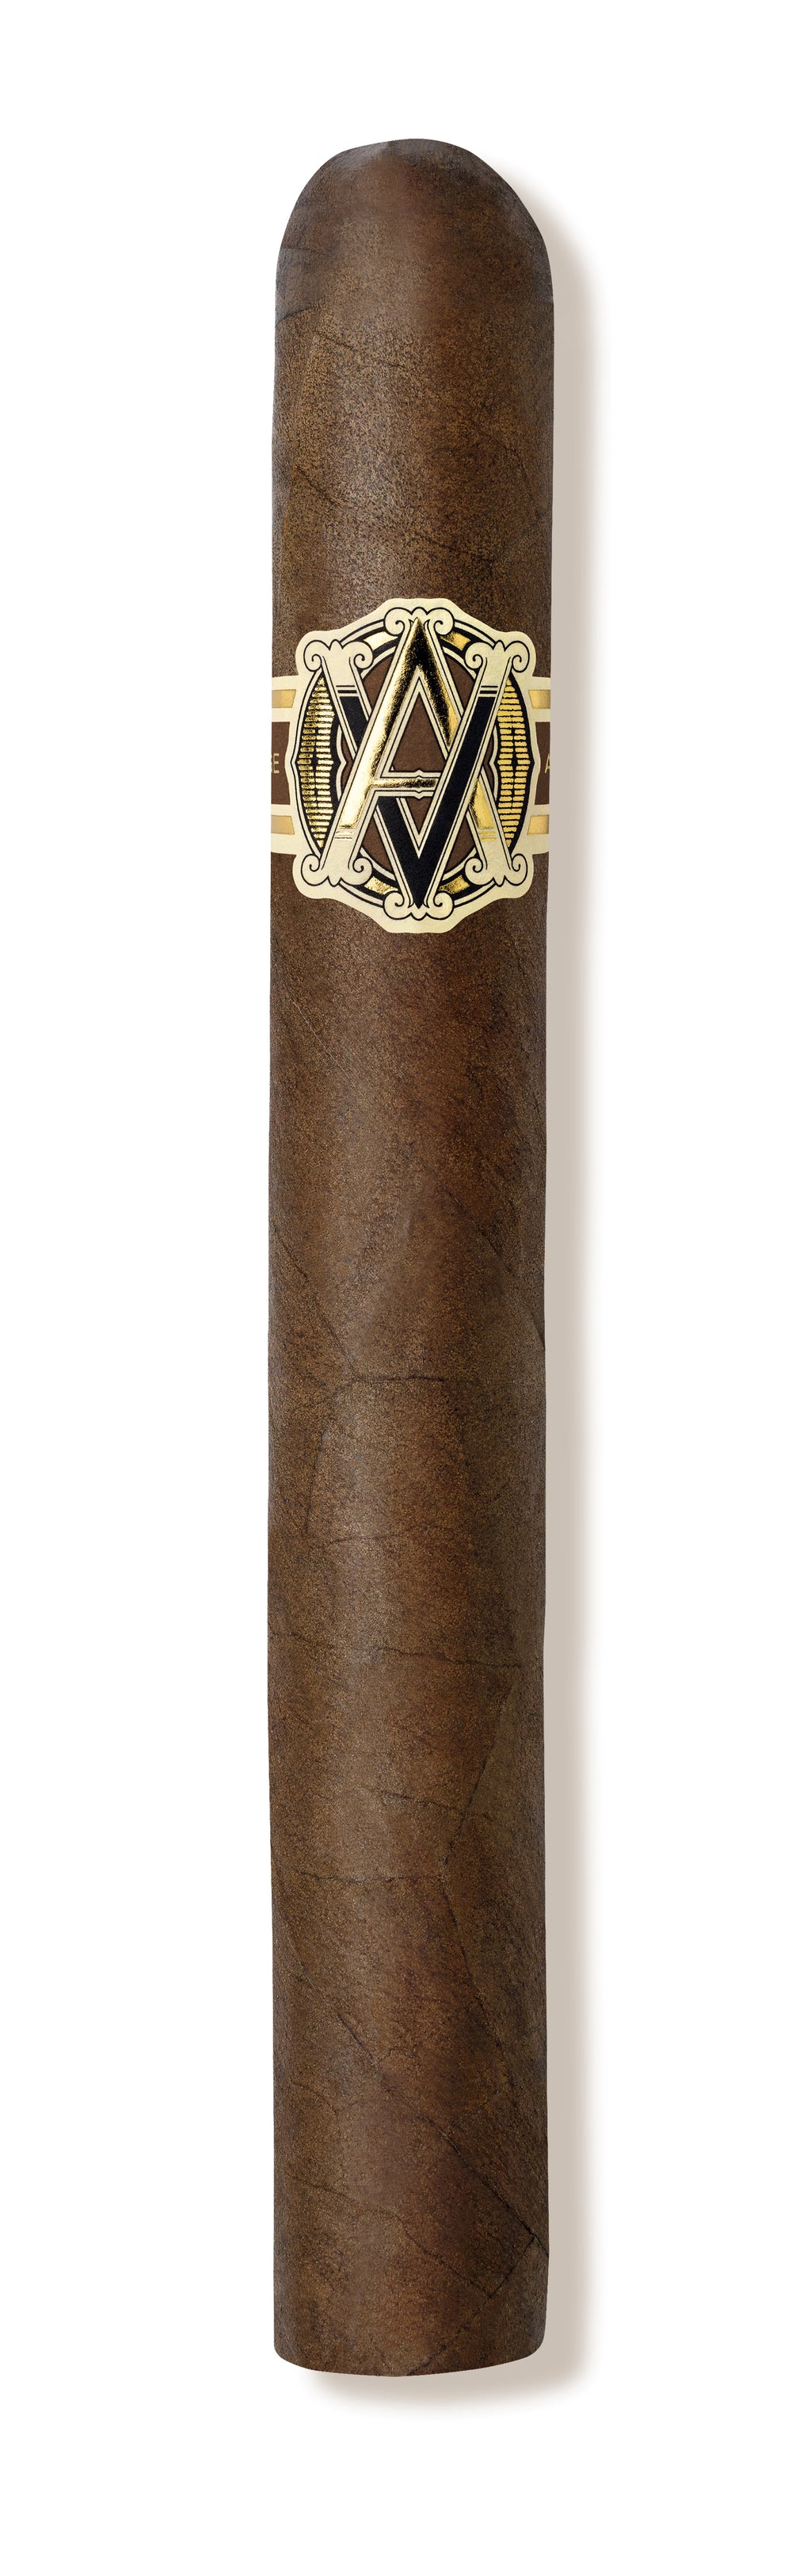 Avo Cigars Heritage Toro Featured Image